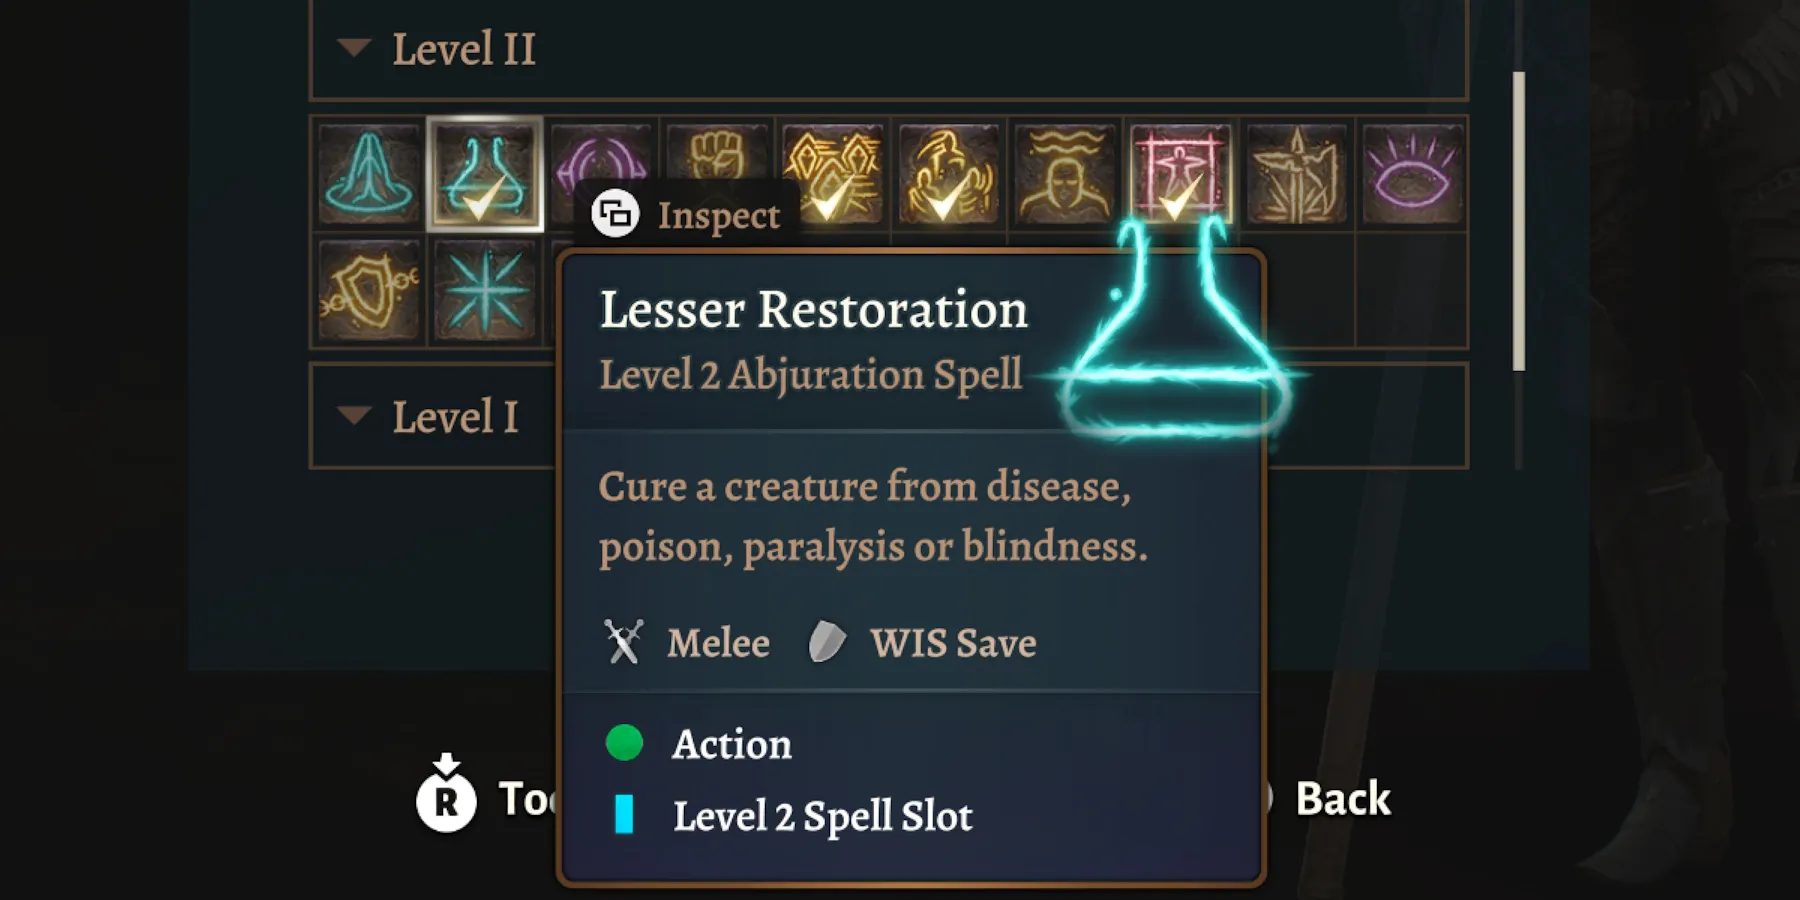 The Lesser Restoration Spell